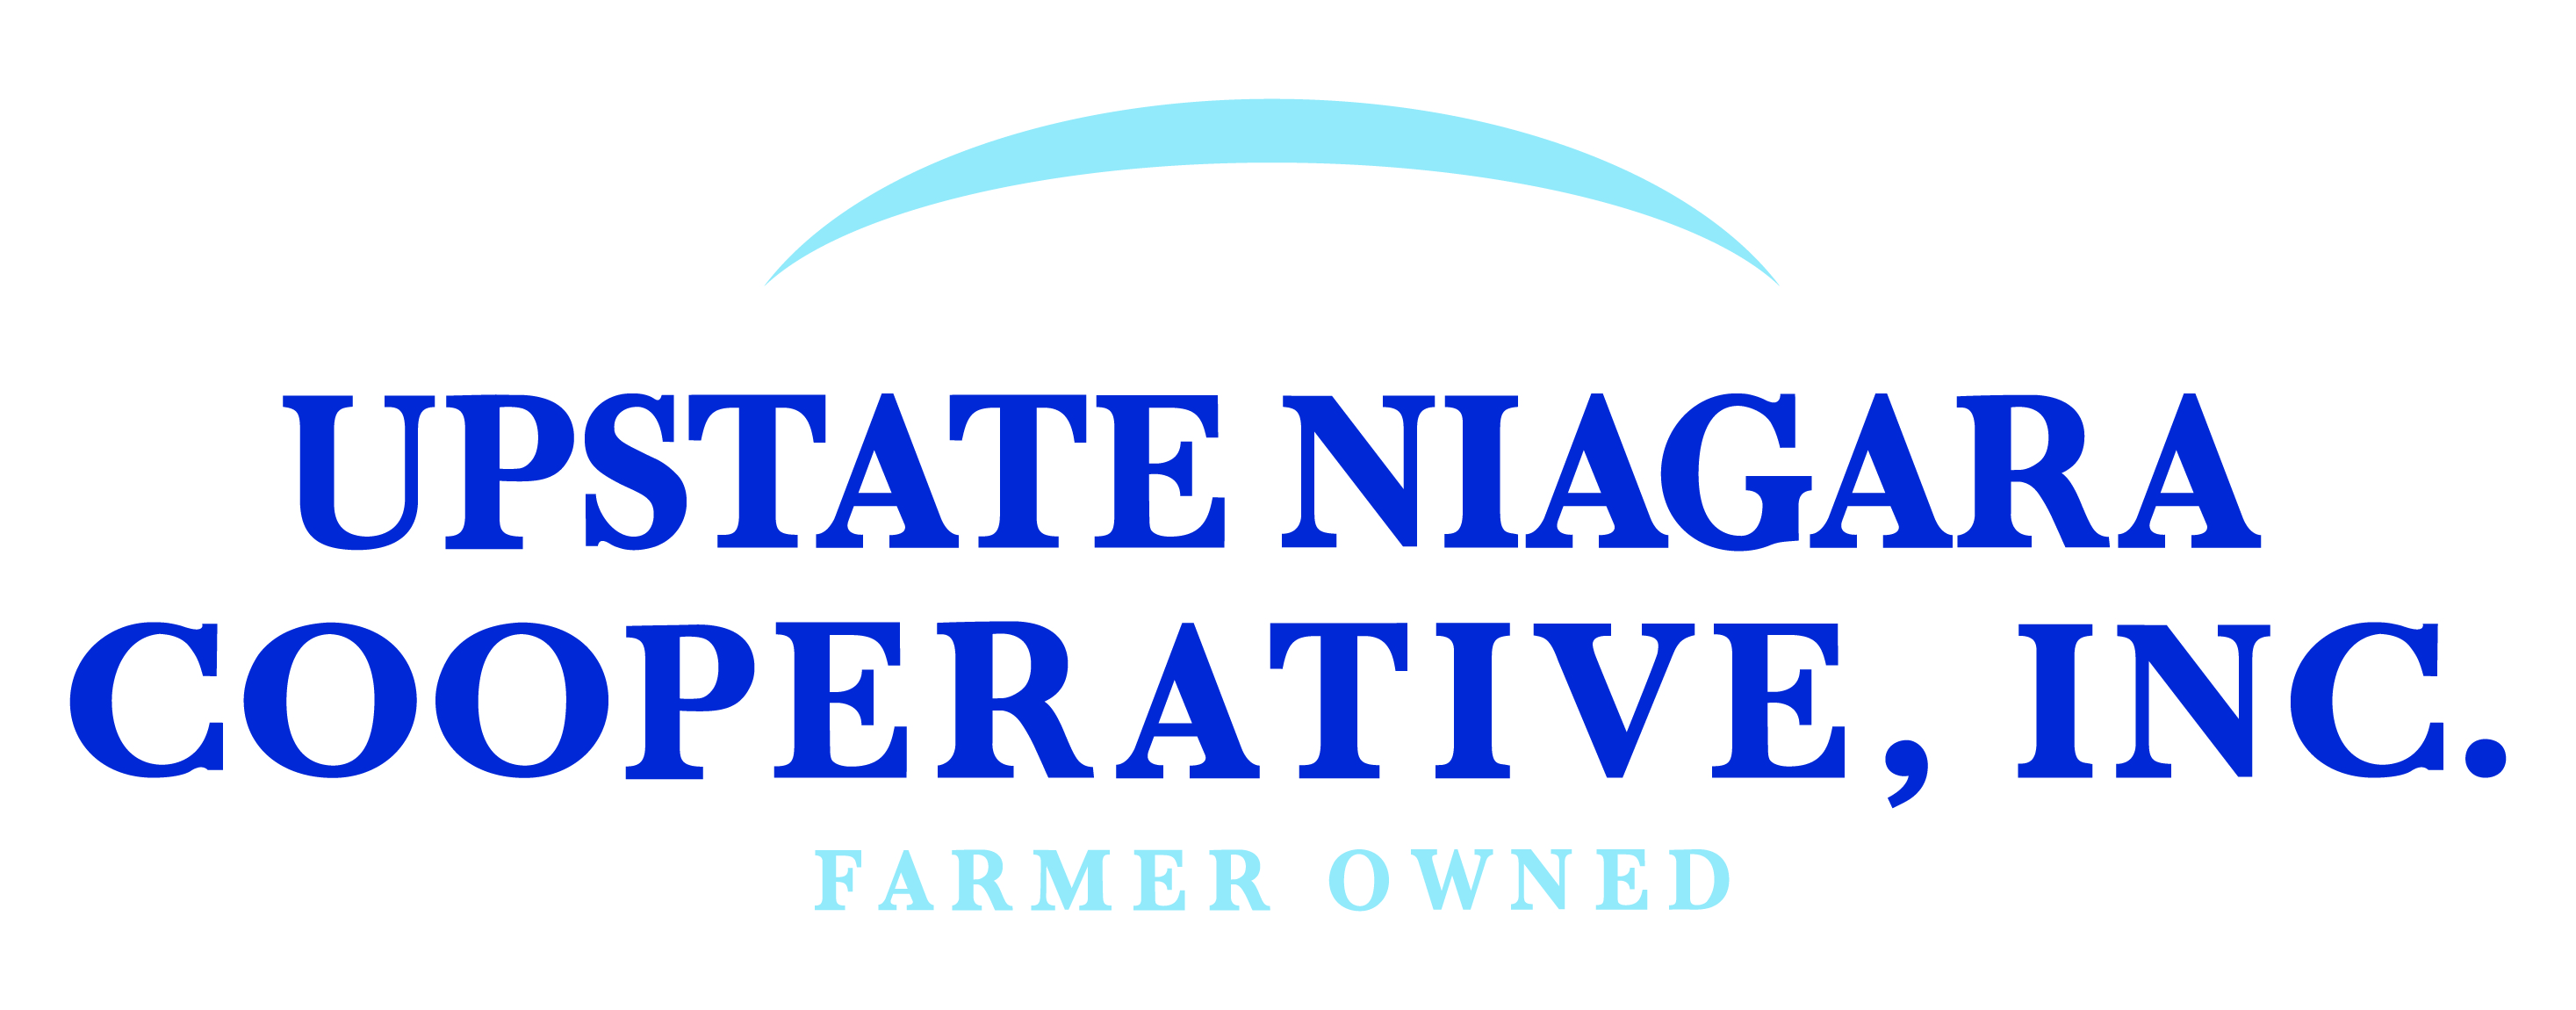 Upstate Niagara Cooperative, Inc. logo